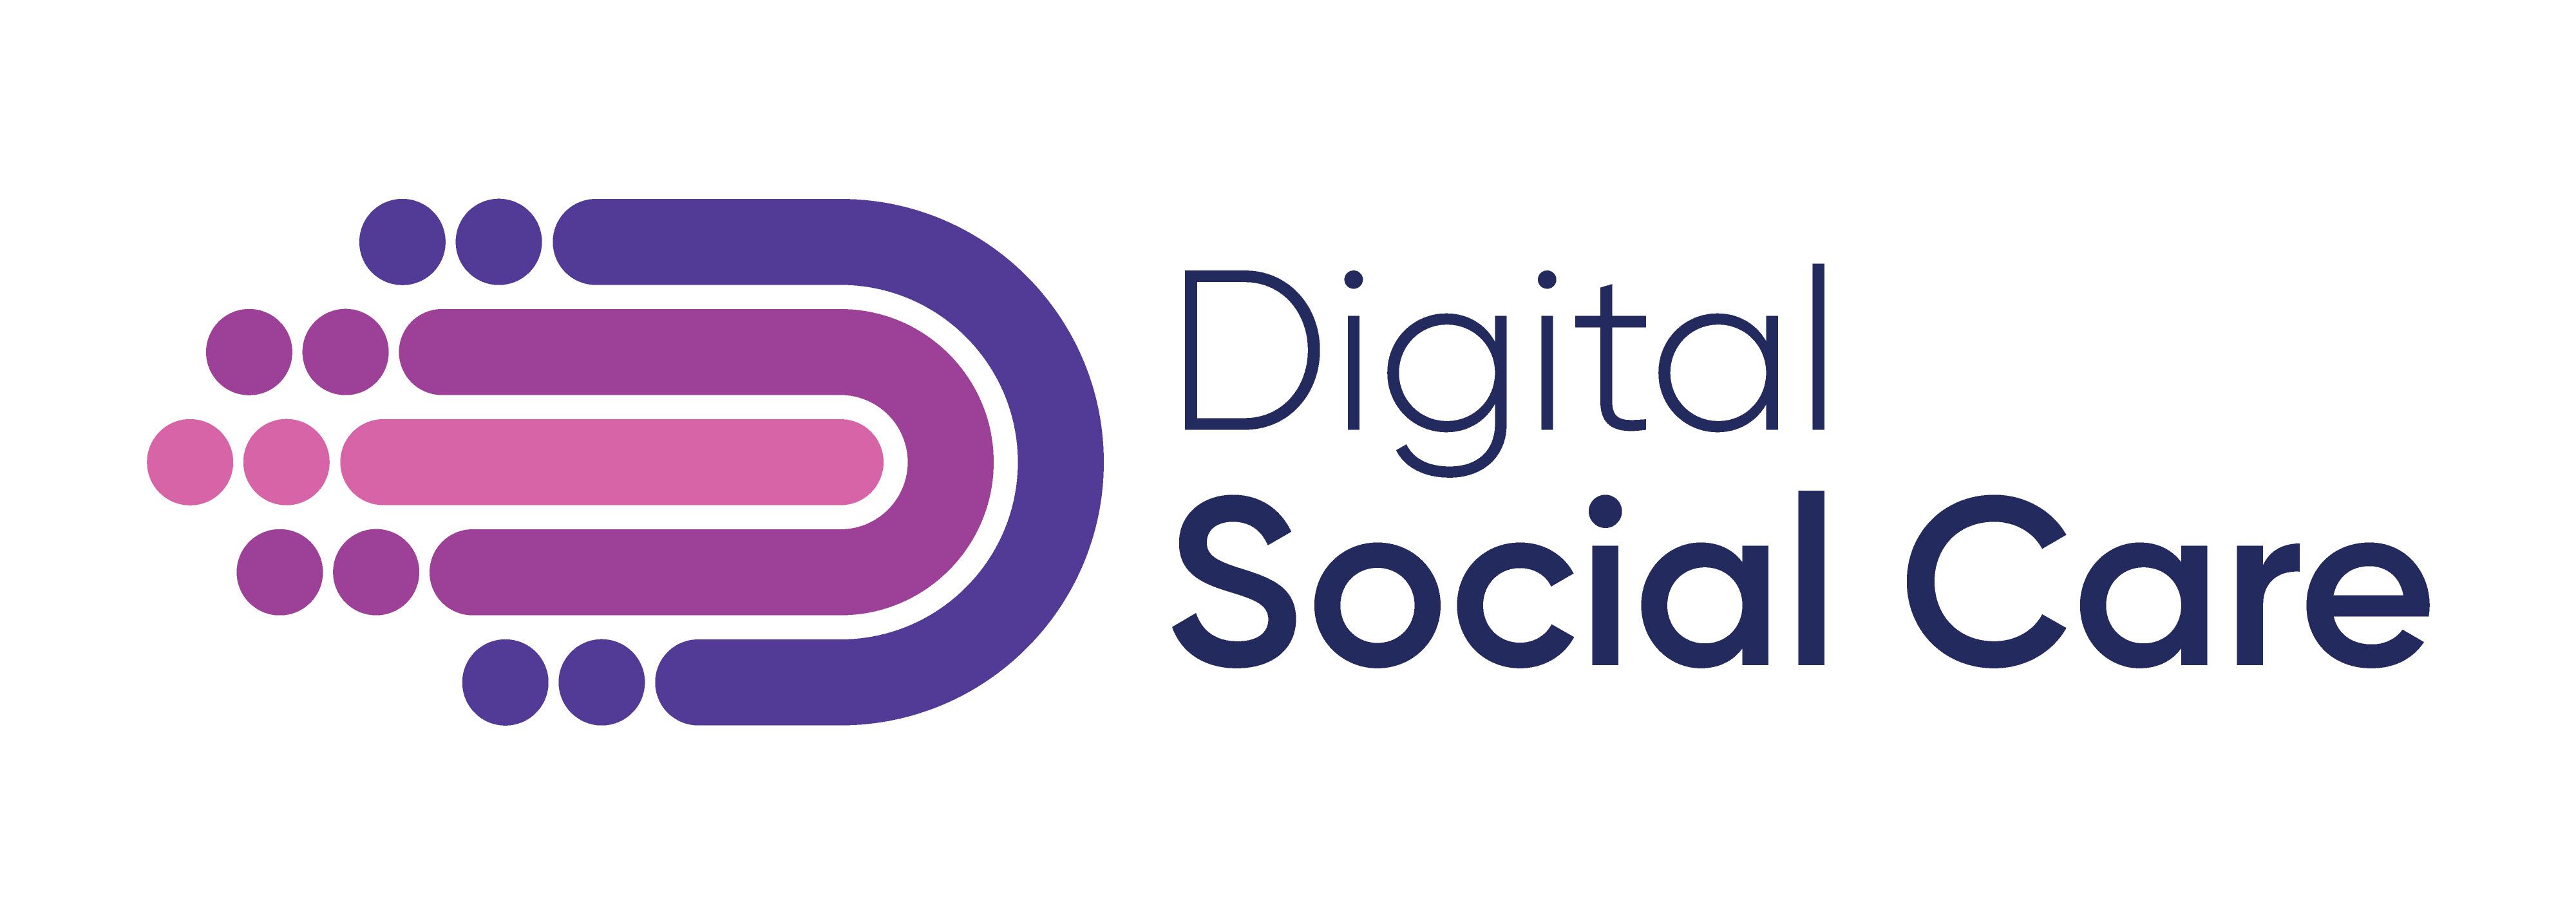 Digital Social Care